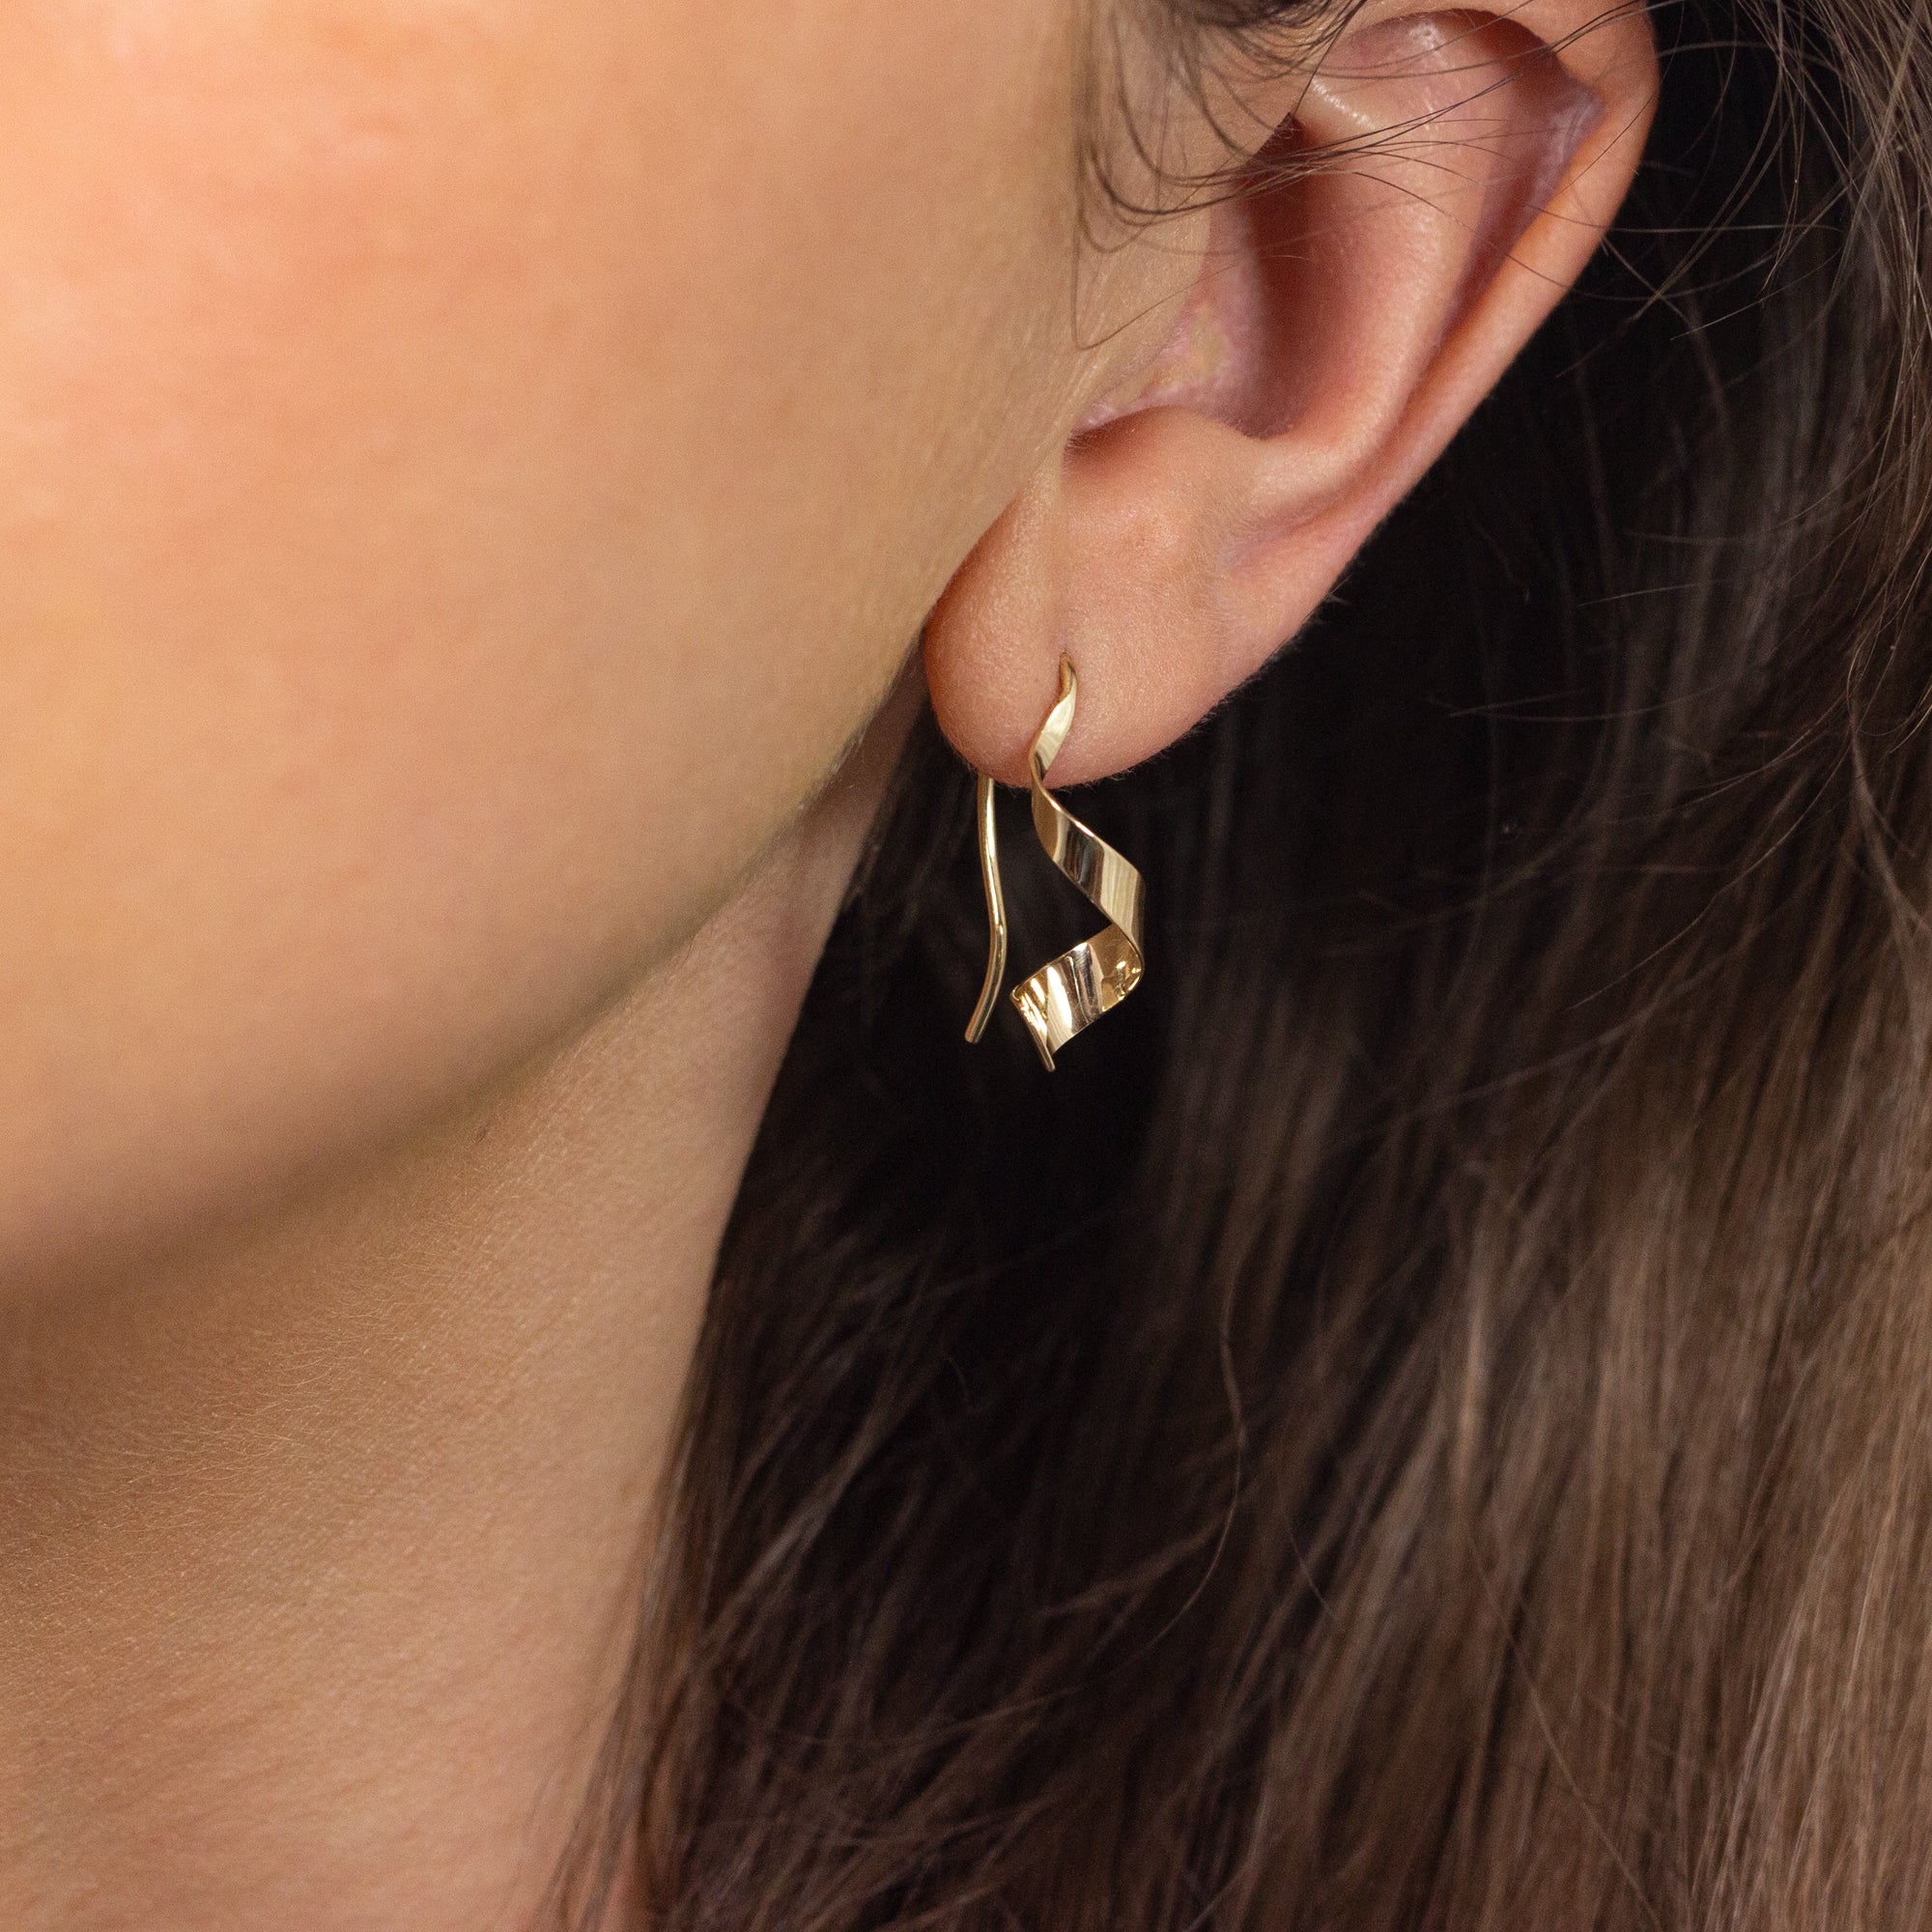 Sidmouth - 14K gold earrings